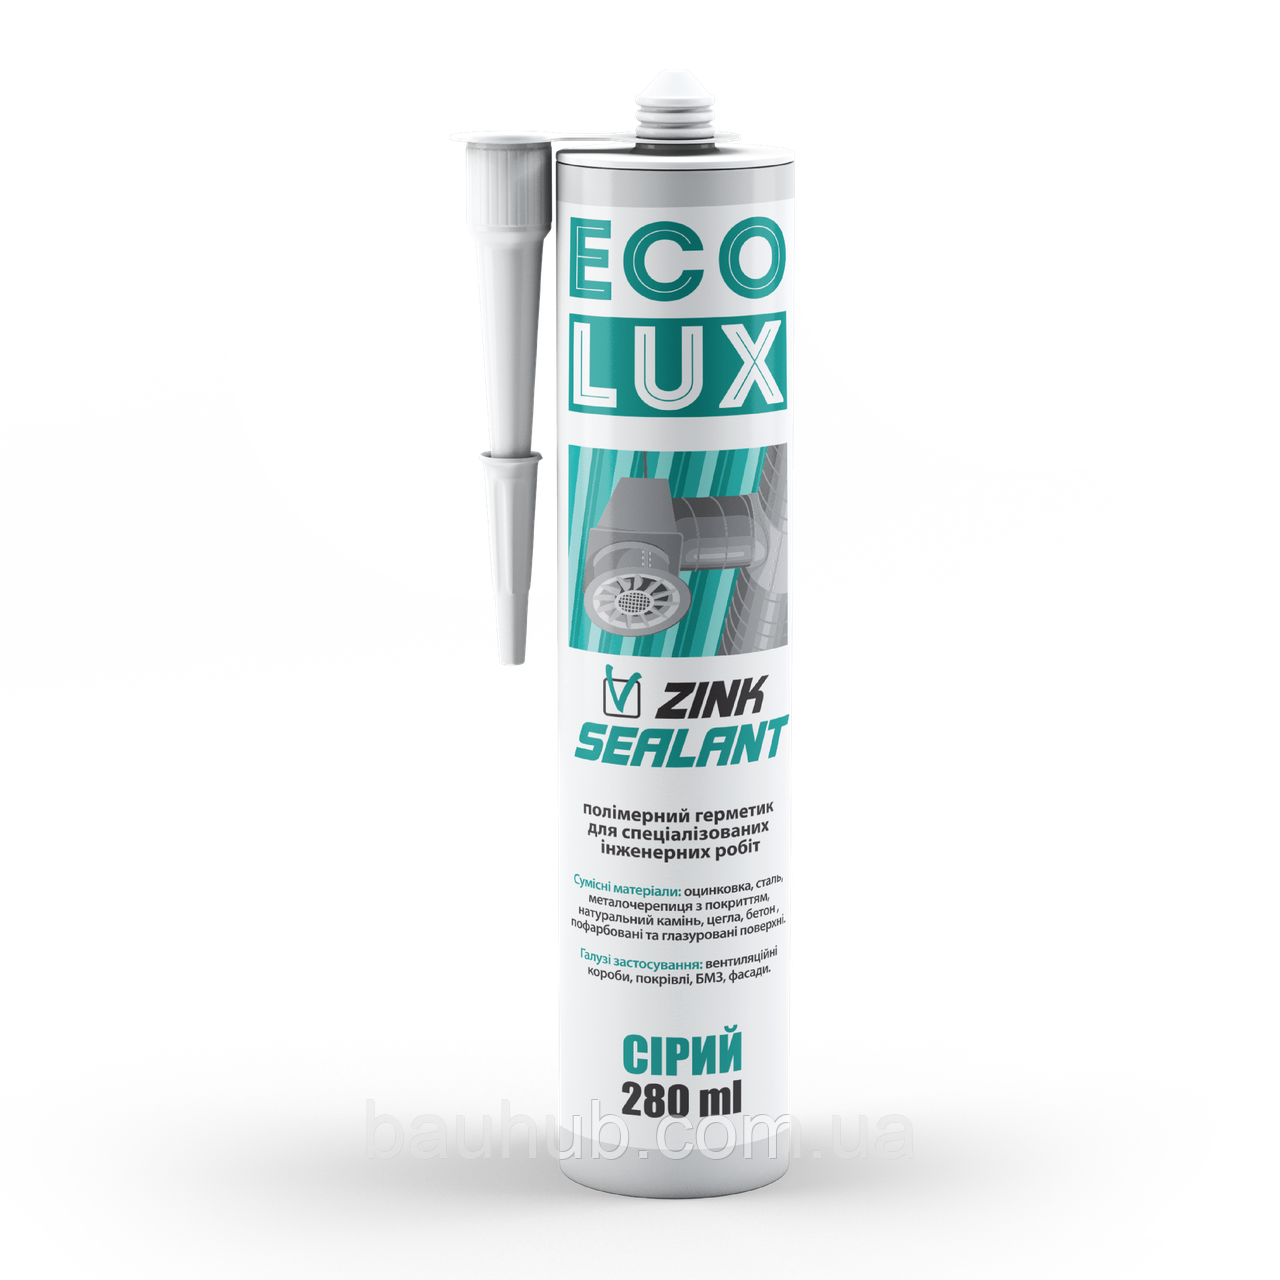 Ecolux ZINK polymer sealant 280 ml, grey - полімерний герметик для вентиляційних систем, сірий